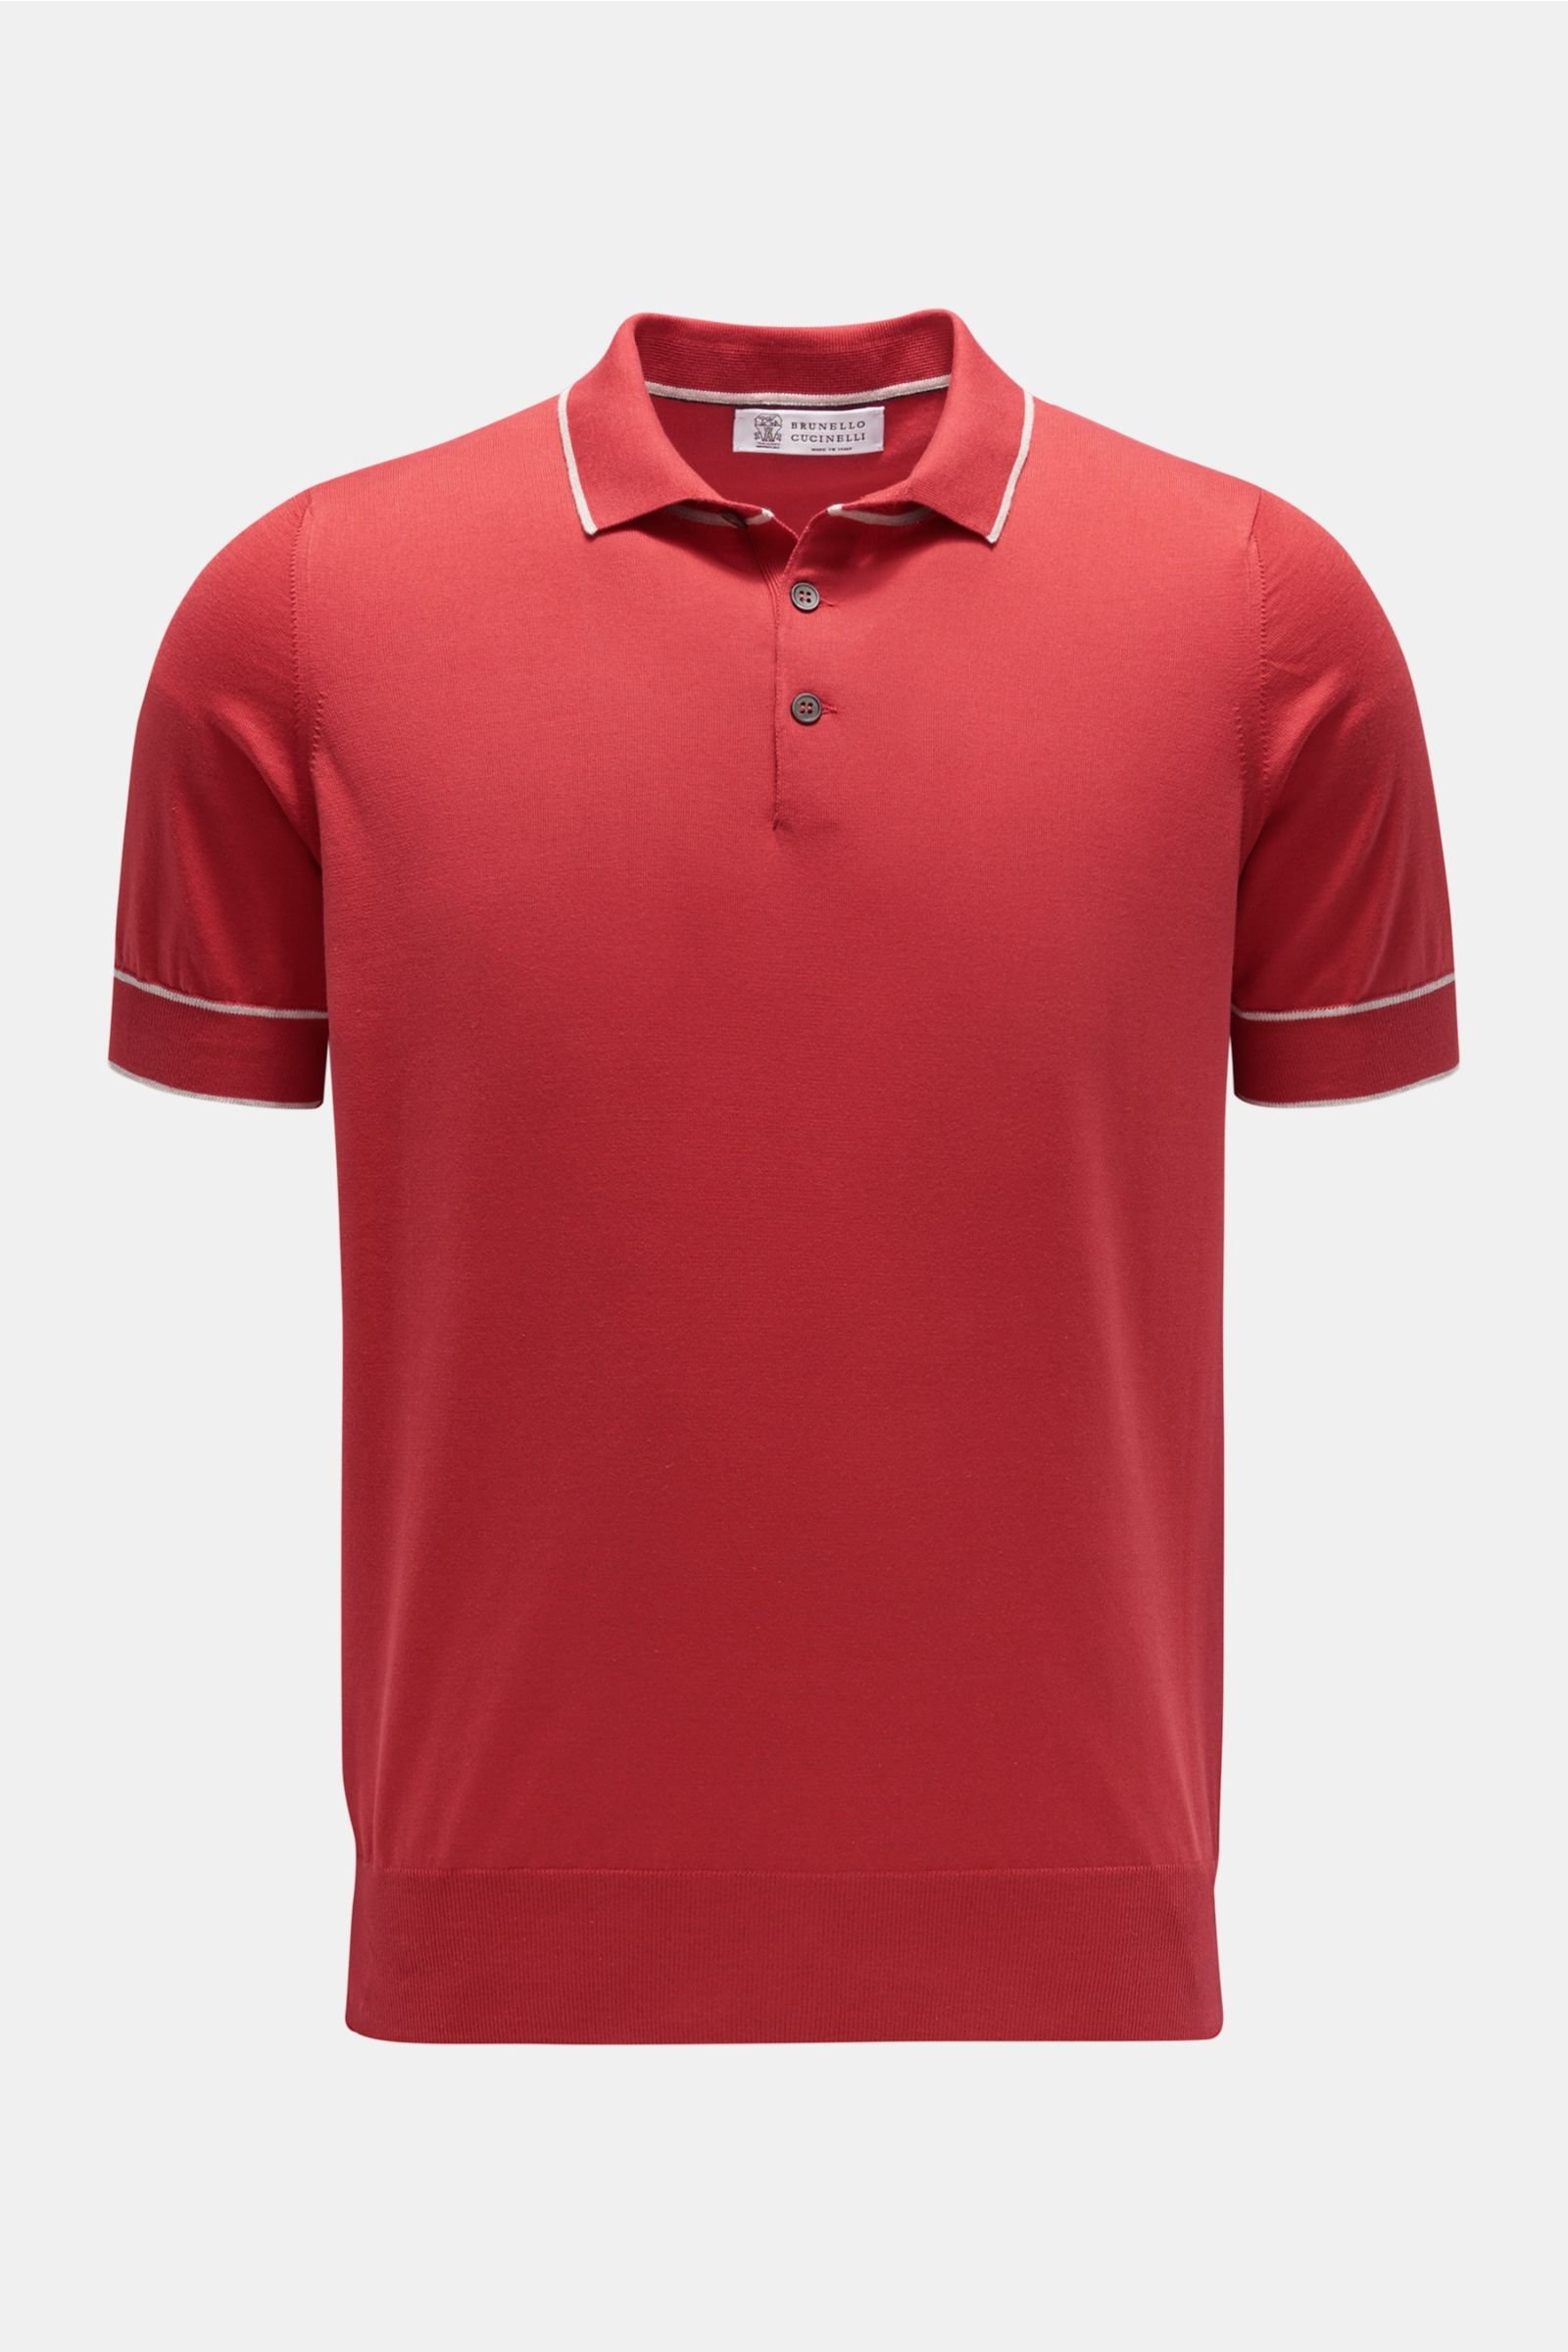 Polo shirt light red